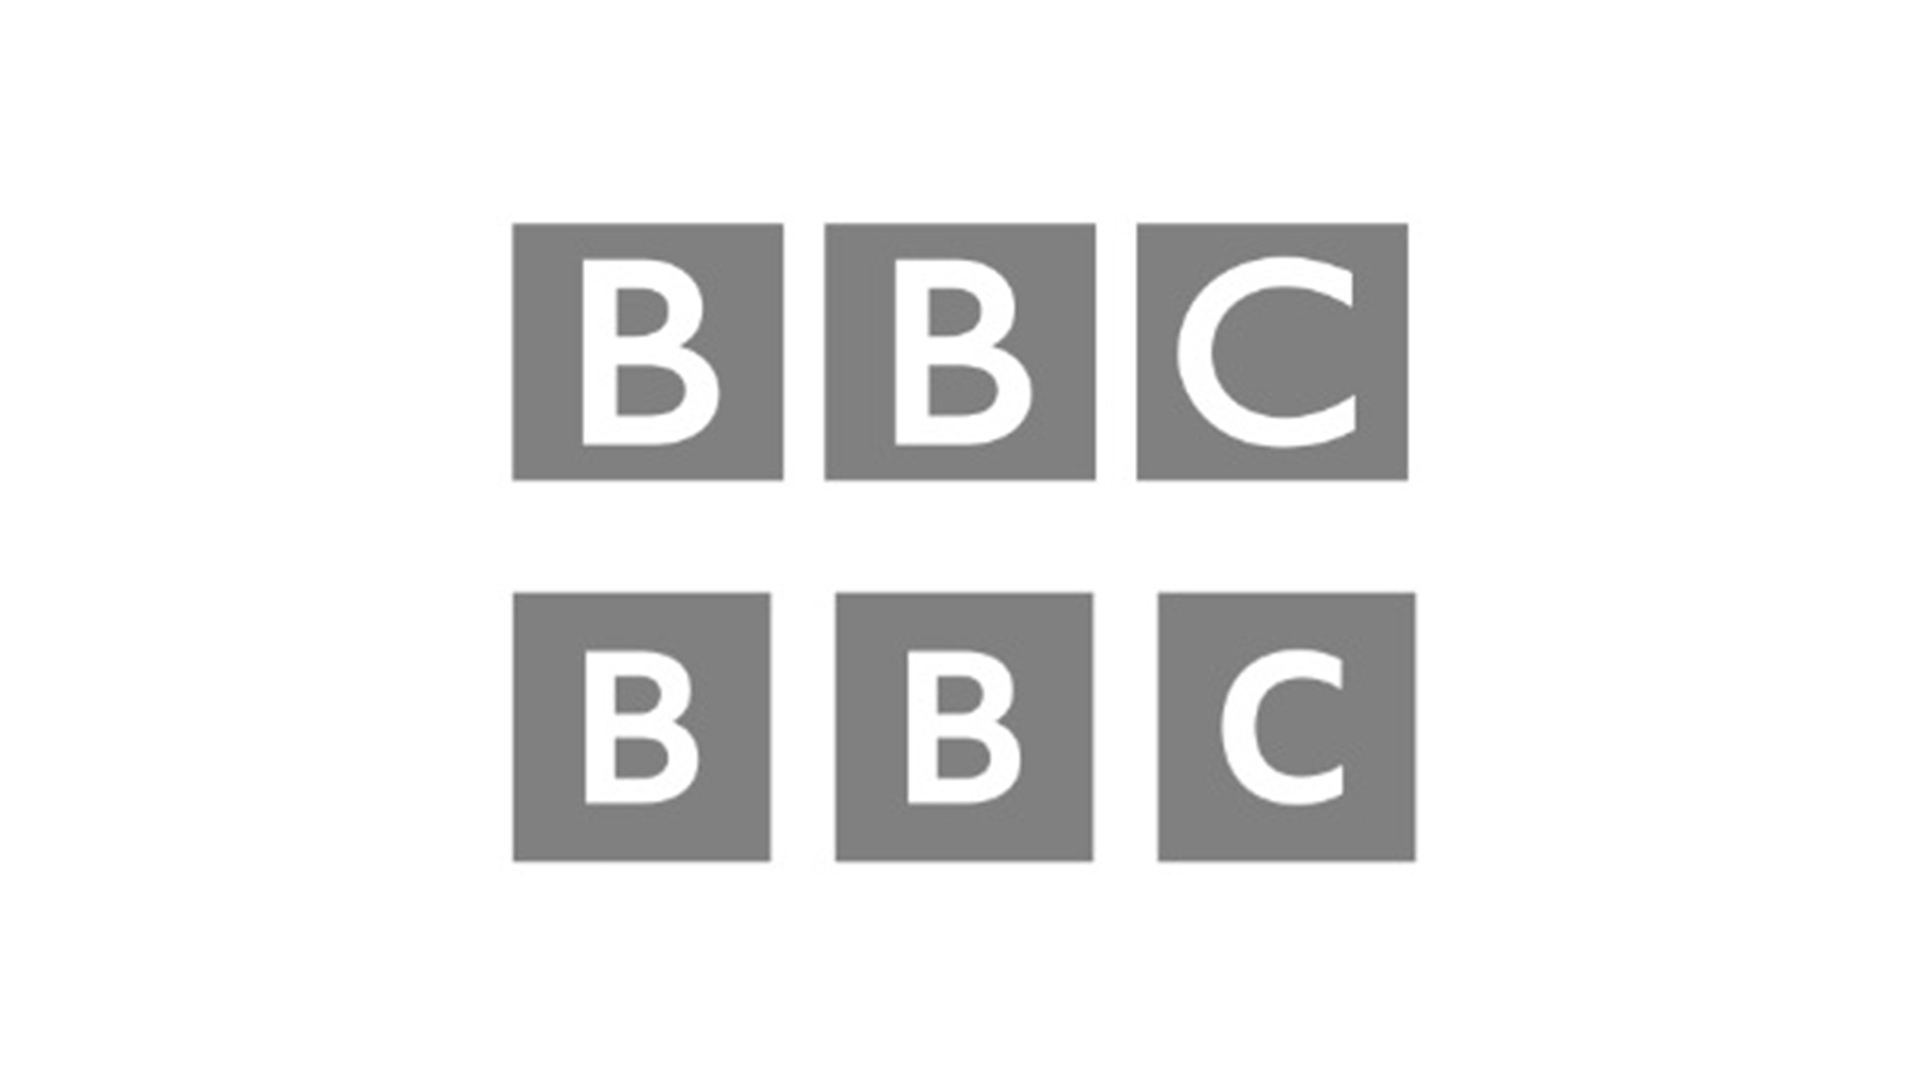 The controversial new BBC logo really